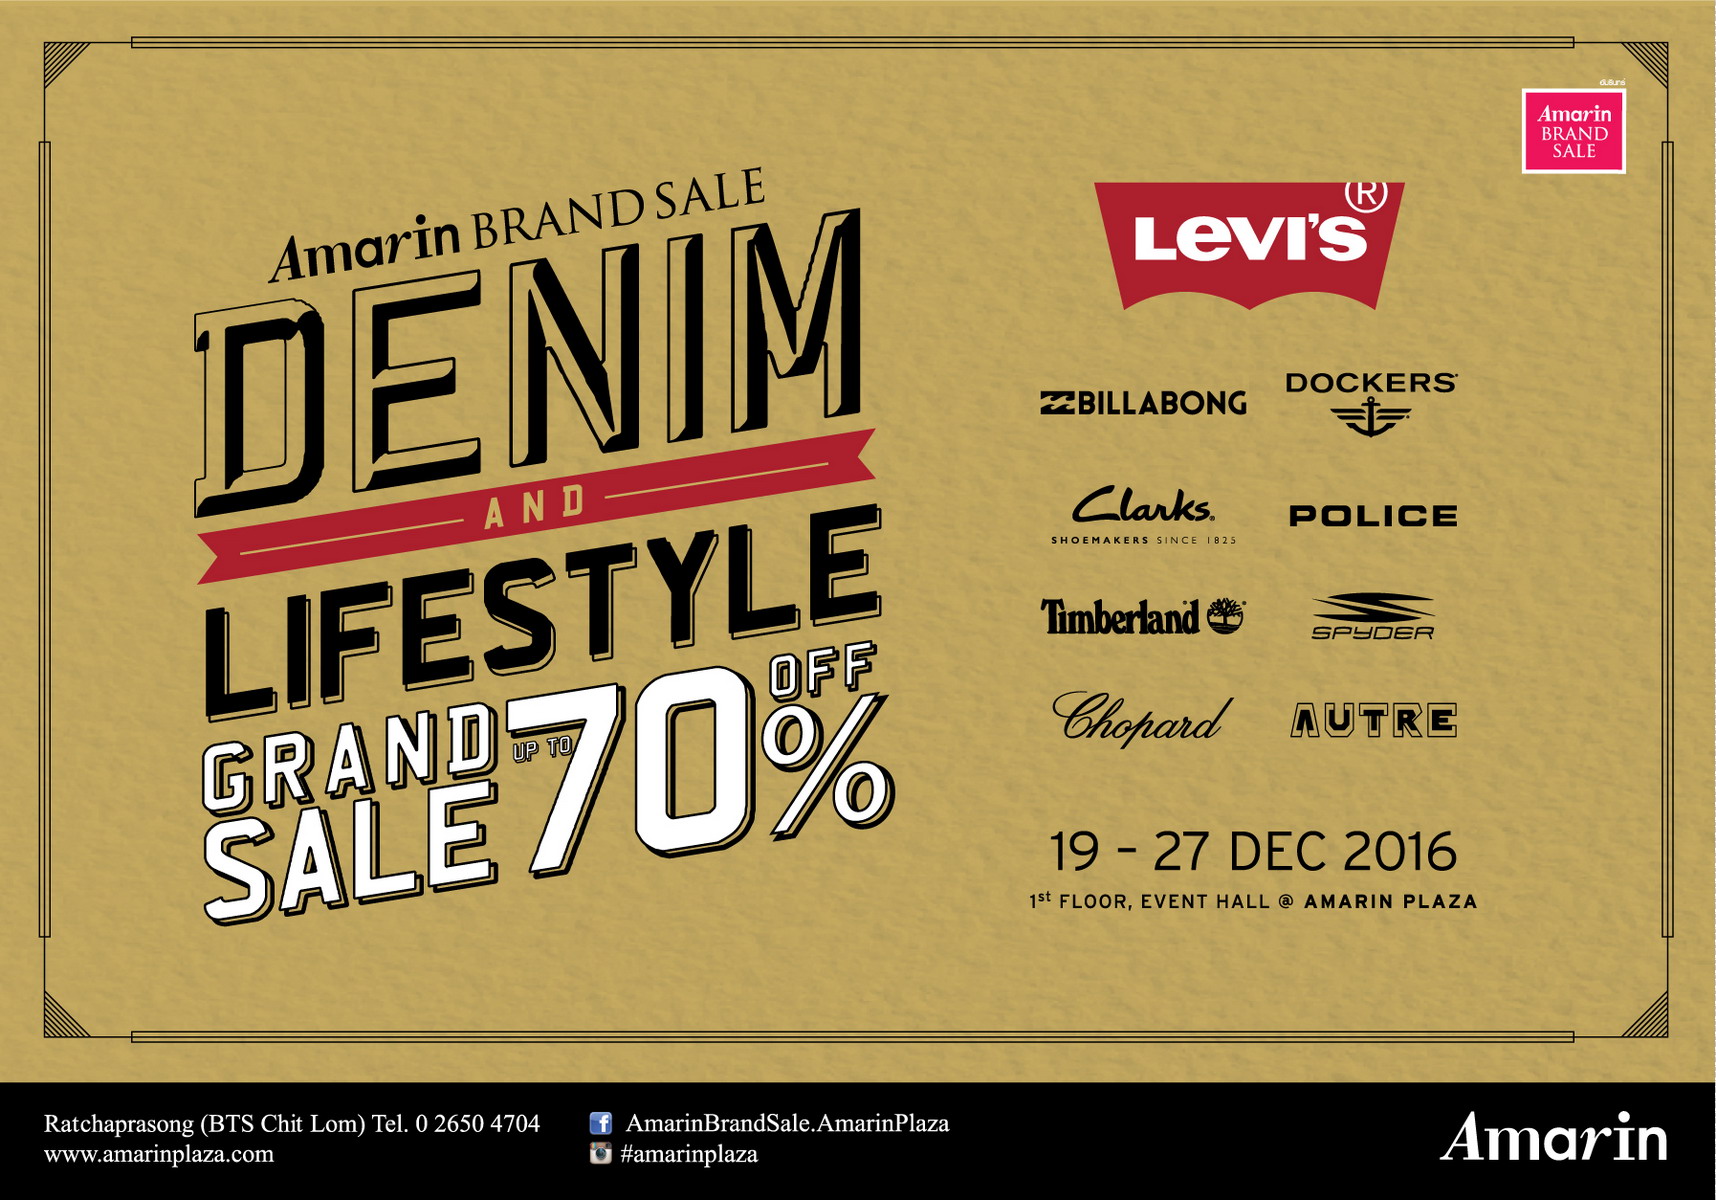 Amarin Brand Sale: Denim & Lifestyle Grand Sale Up to 70%